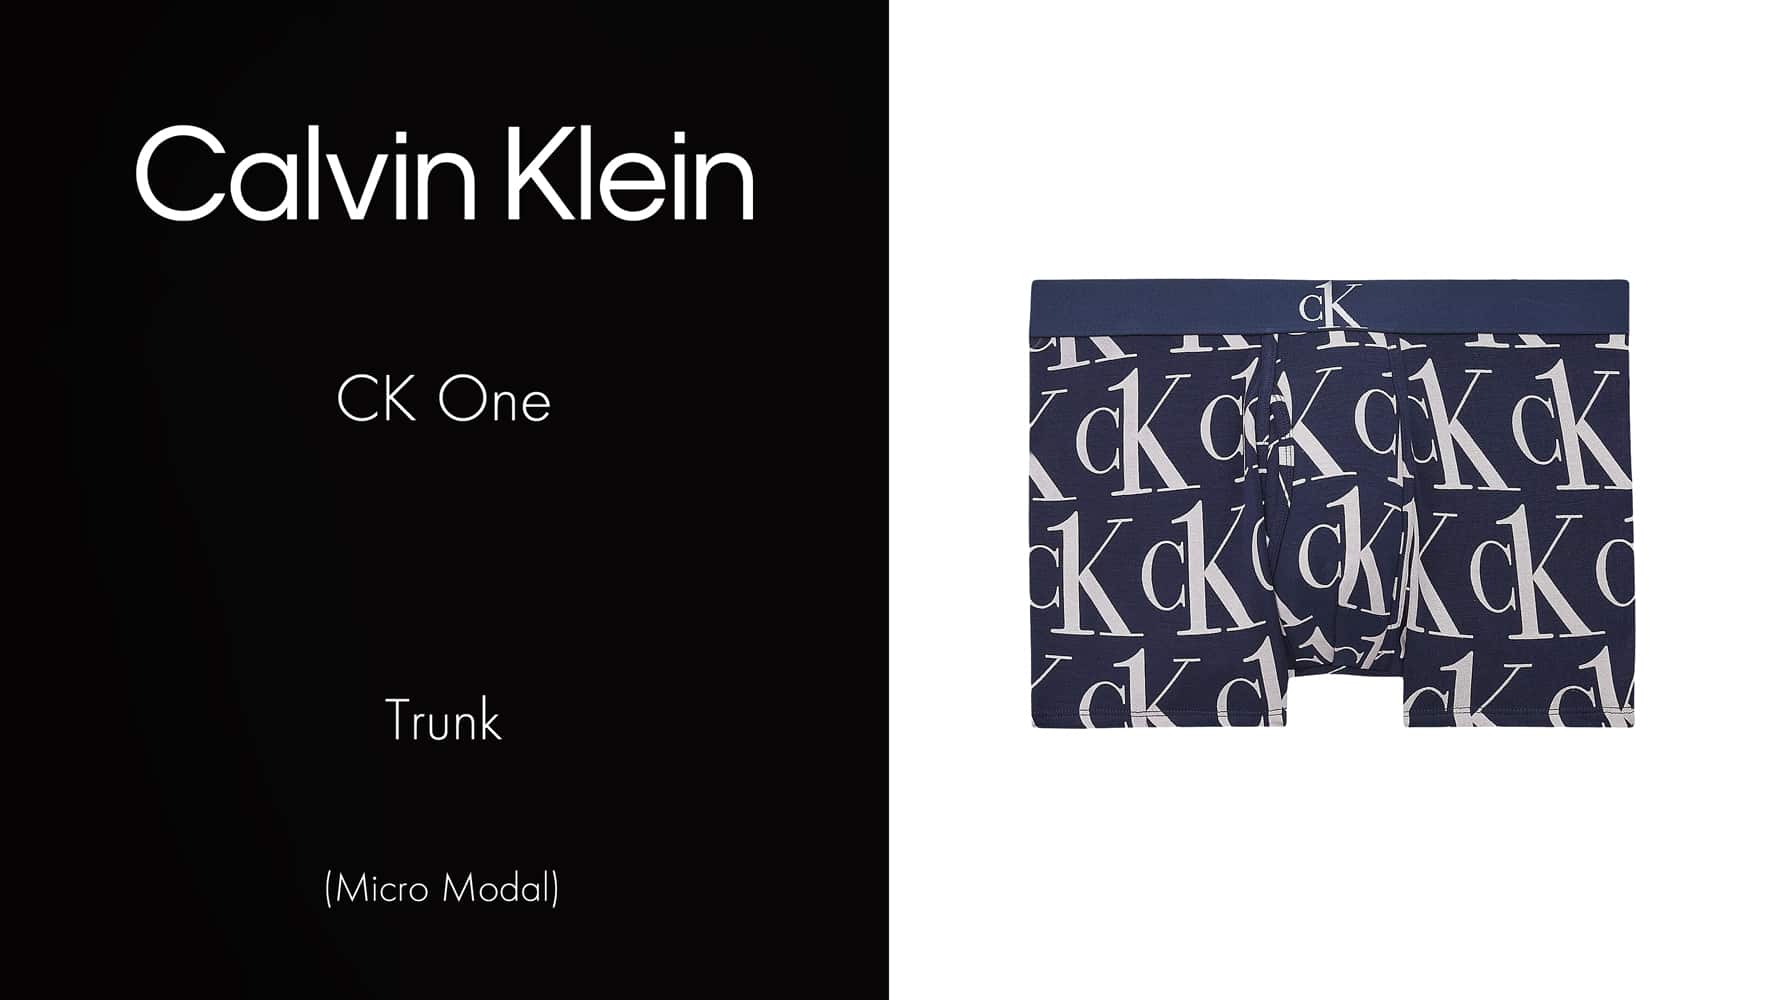 Trunk - CK One - Plush